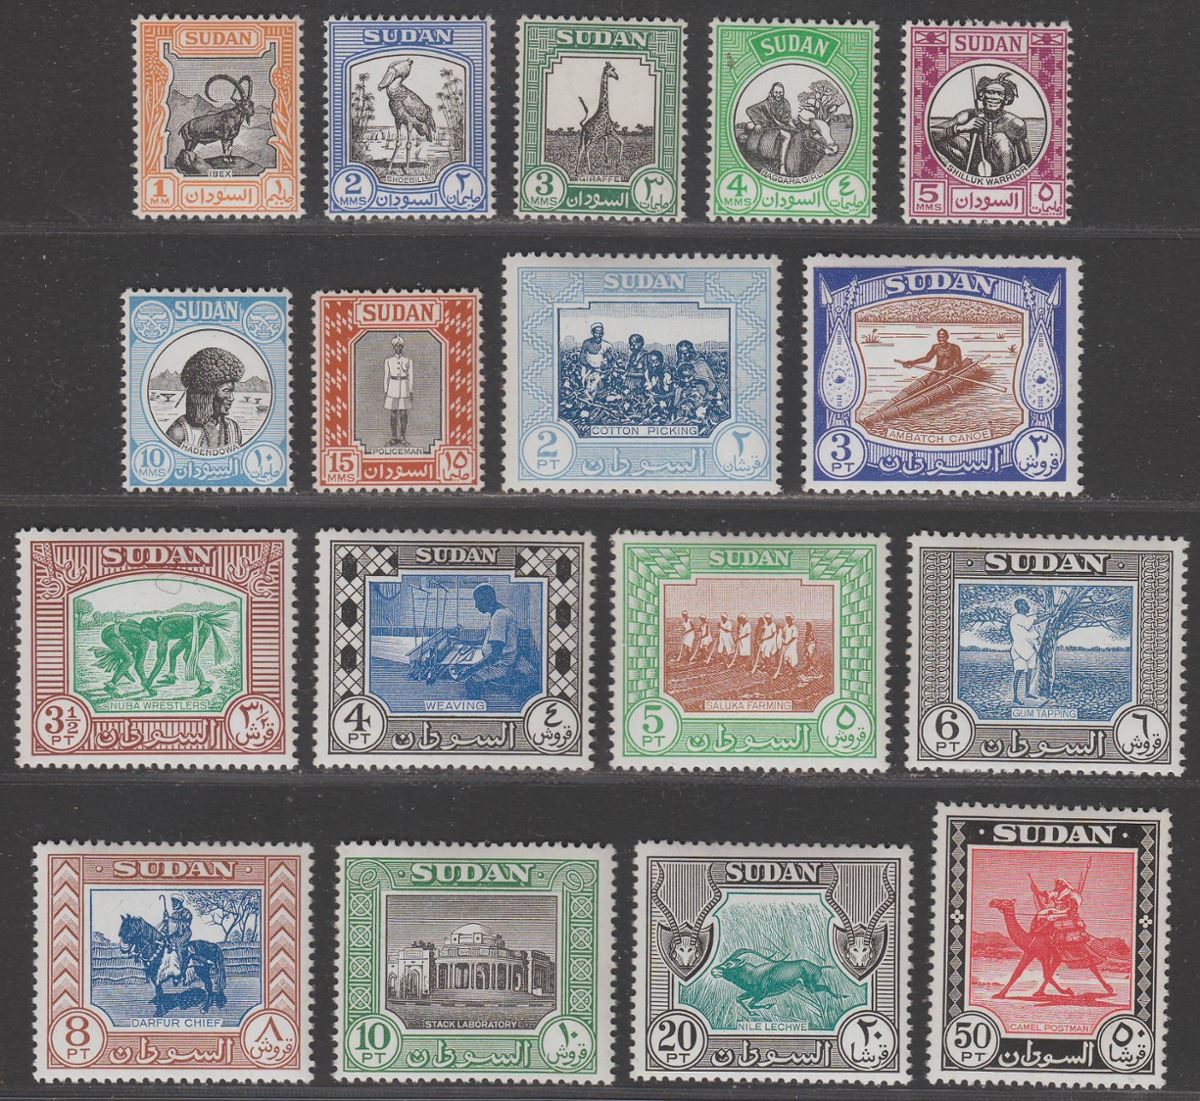 Sudan 1951 King George VI Pictorial Set Mint SG123-139 cat £100 MNH